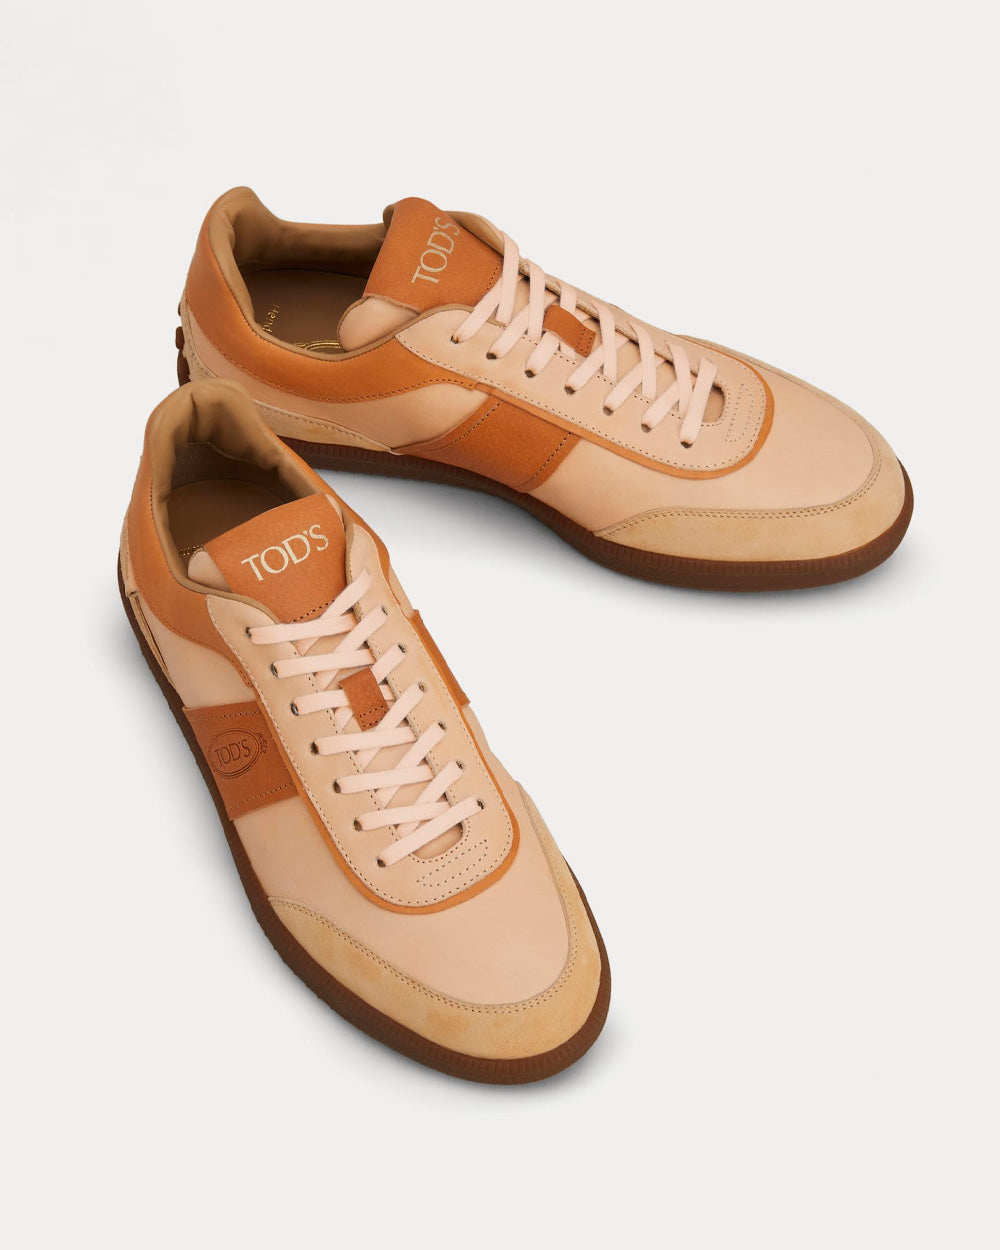 Tod's x Hender Scheme - Tabs Leather Beige / Brown Low Top Sneakers